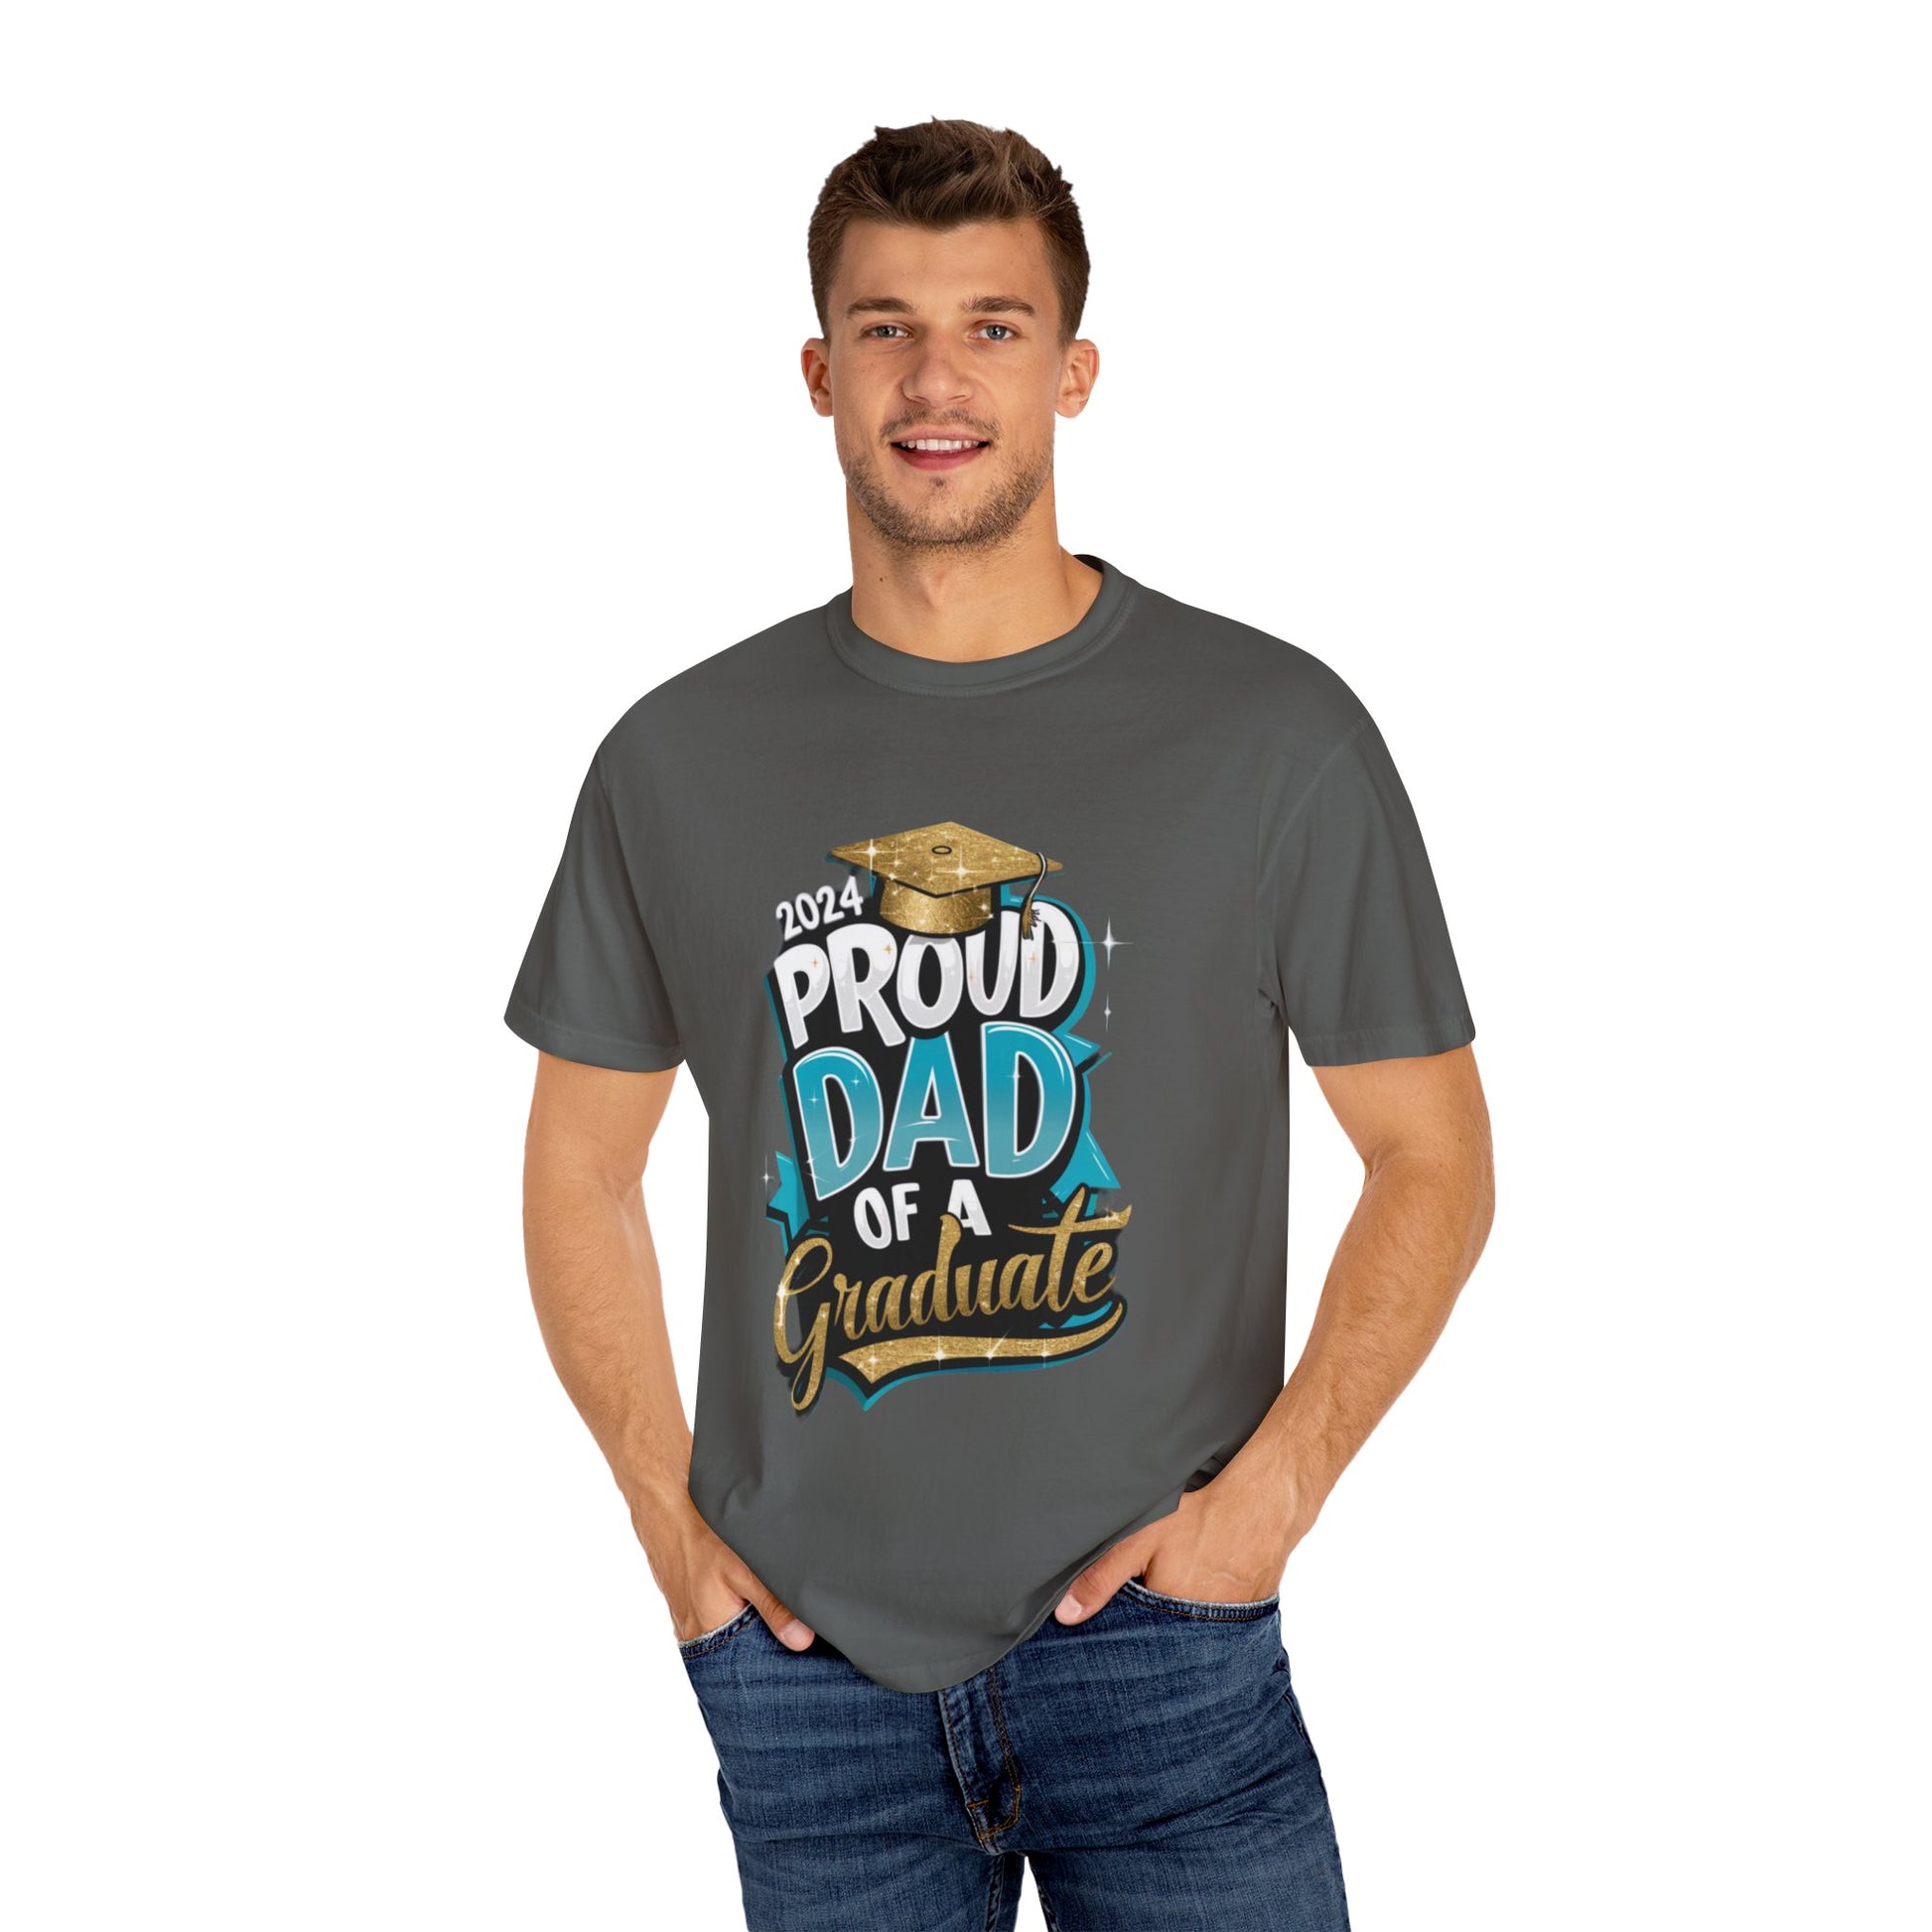 Proud Dad of a 2024 Graduate Unisex Garment-dyed T-shirt Cotton Funny Humorous Graphic Soft Premium Unisex Men Women Pepper T-shirt Birthday Gift-51